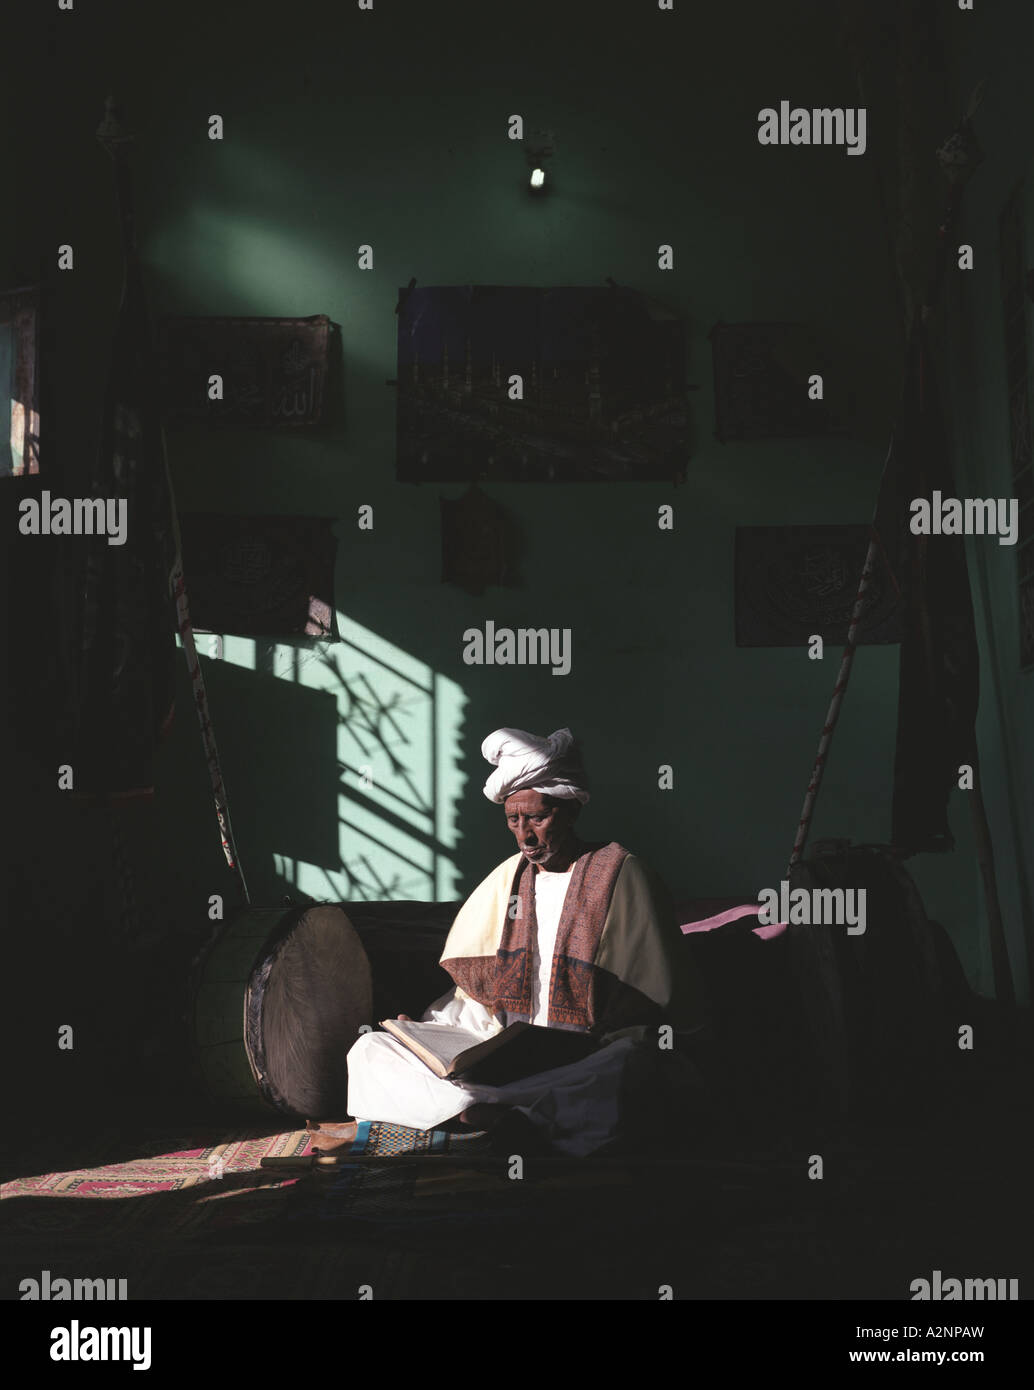 Sufi sheick, Sudan Stock Photo